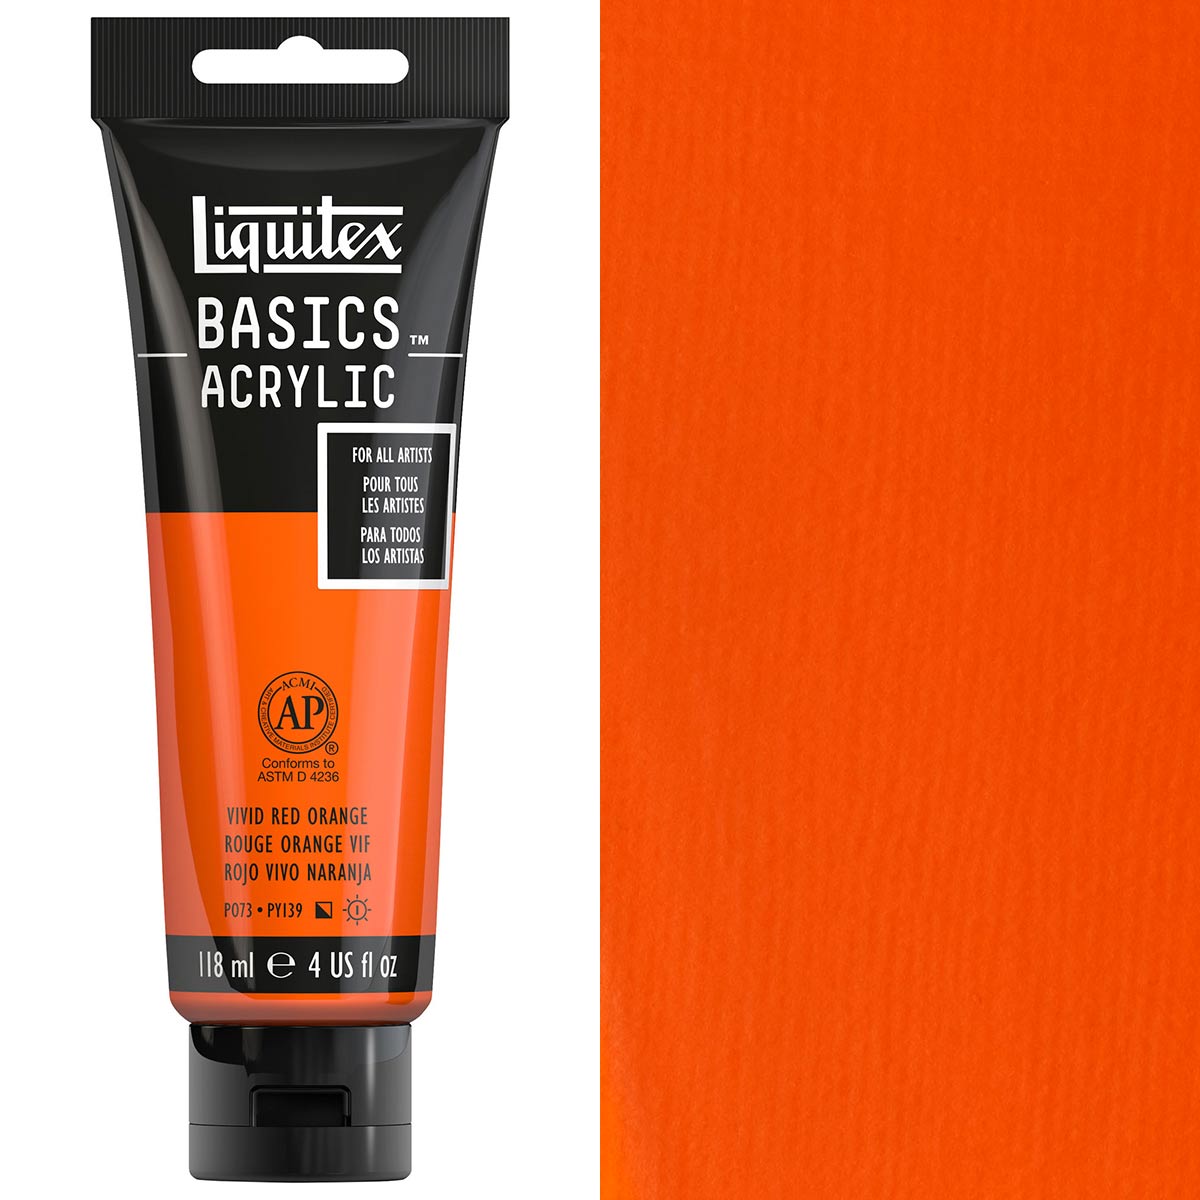 Liquitex - Basics Acrylic Colour - 118ml - Vivid Red Orange